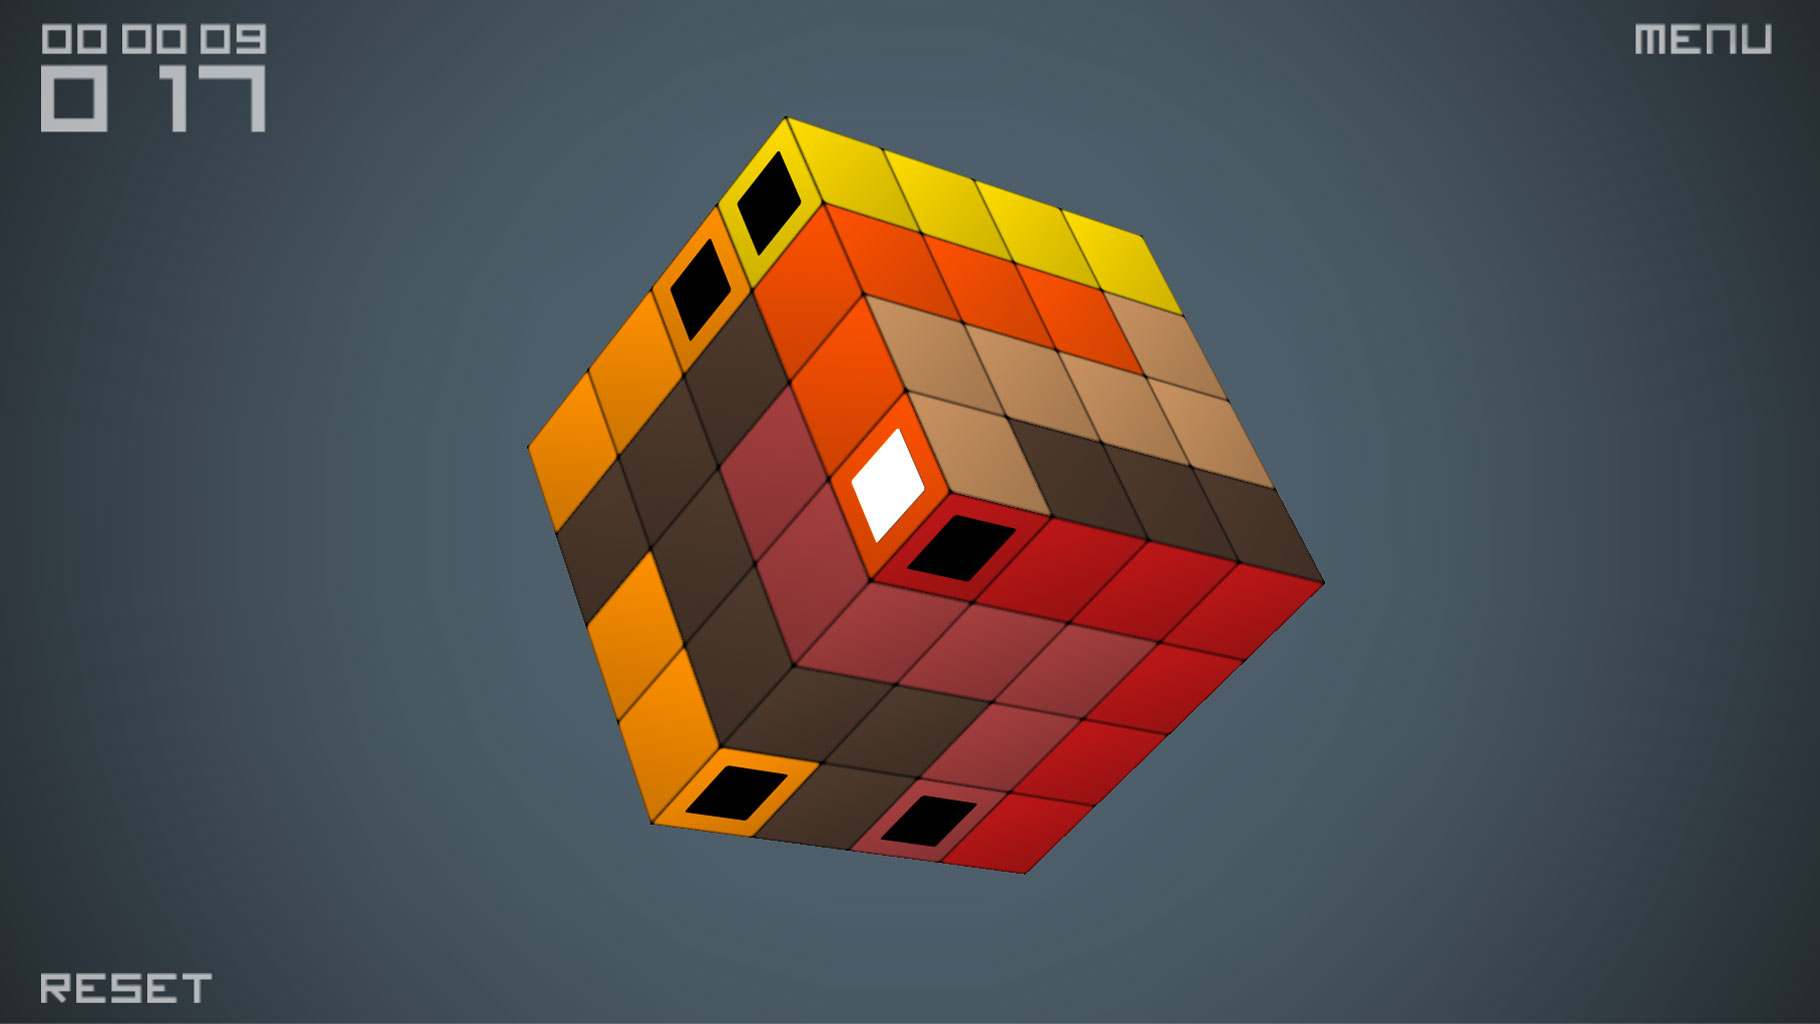 Cube Link screenshot